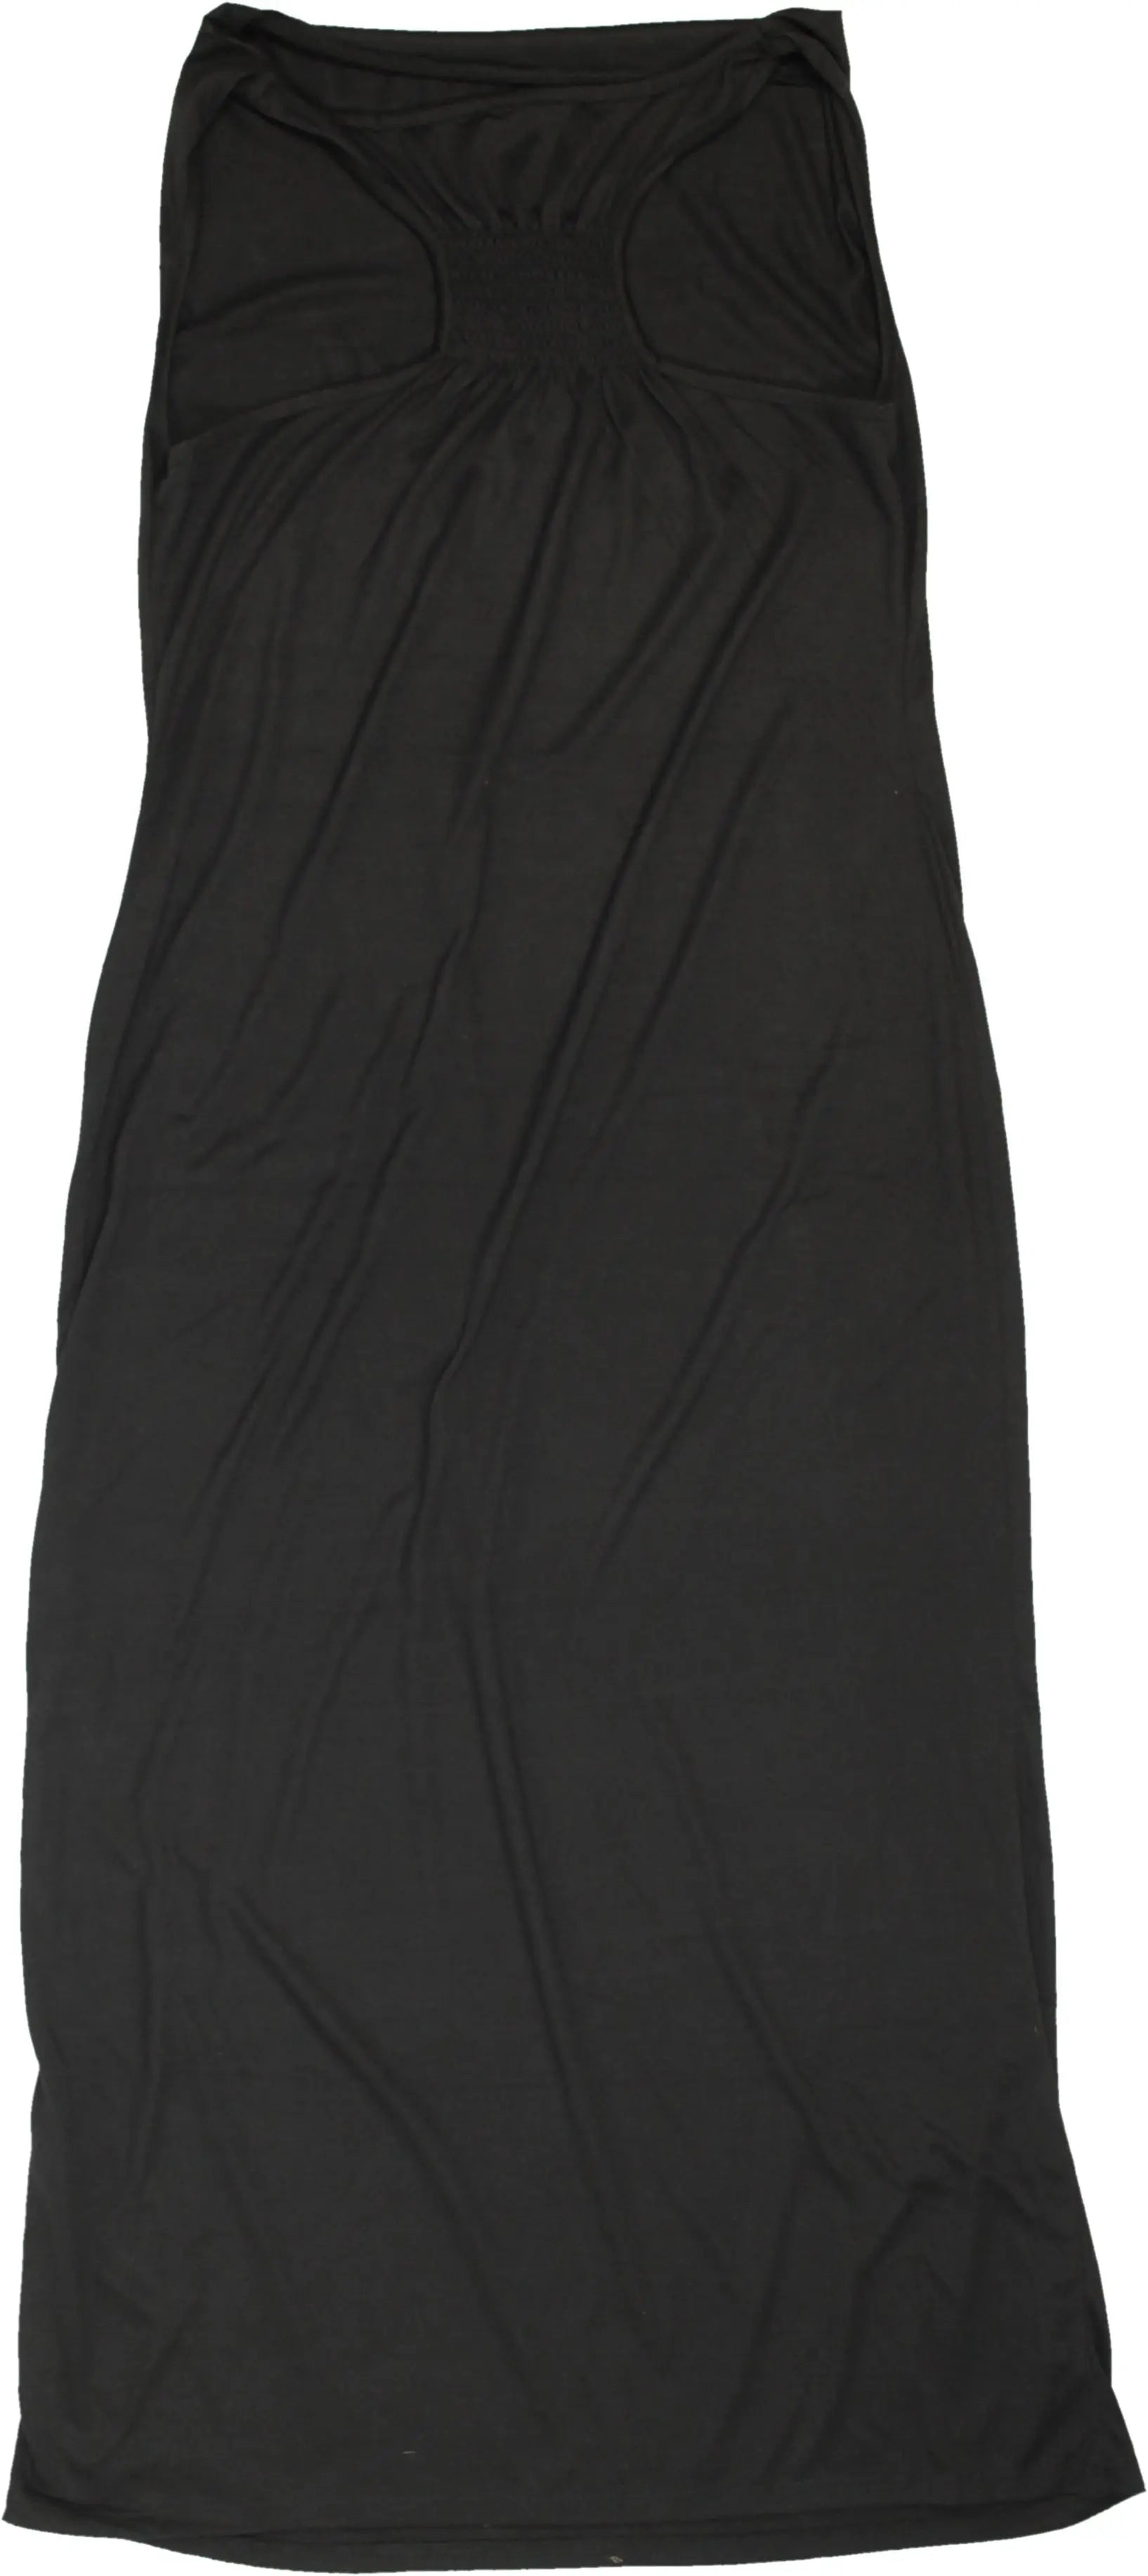 Zeeman - Black Maxi Dress- ThriftTale.com - Vintage and second handclothing